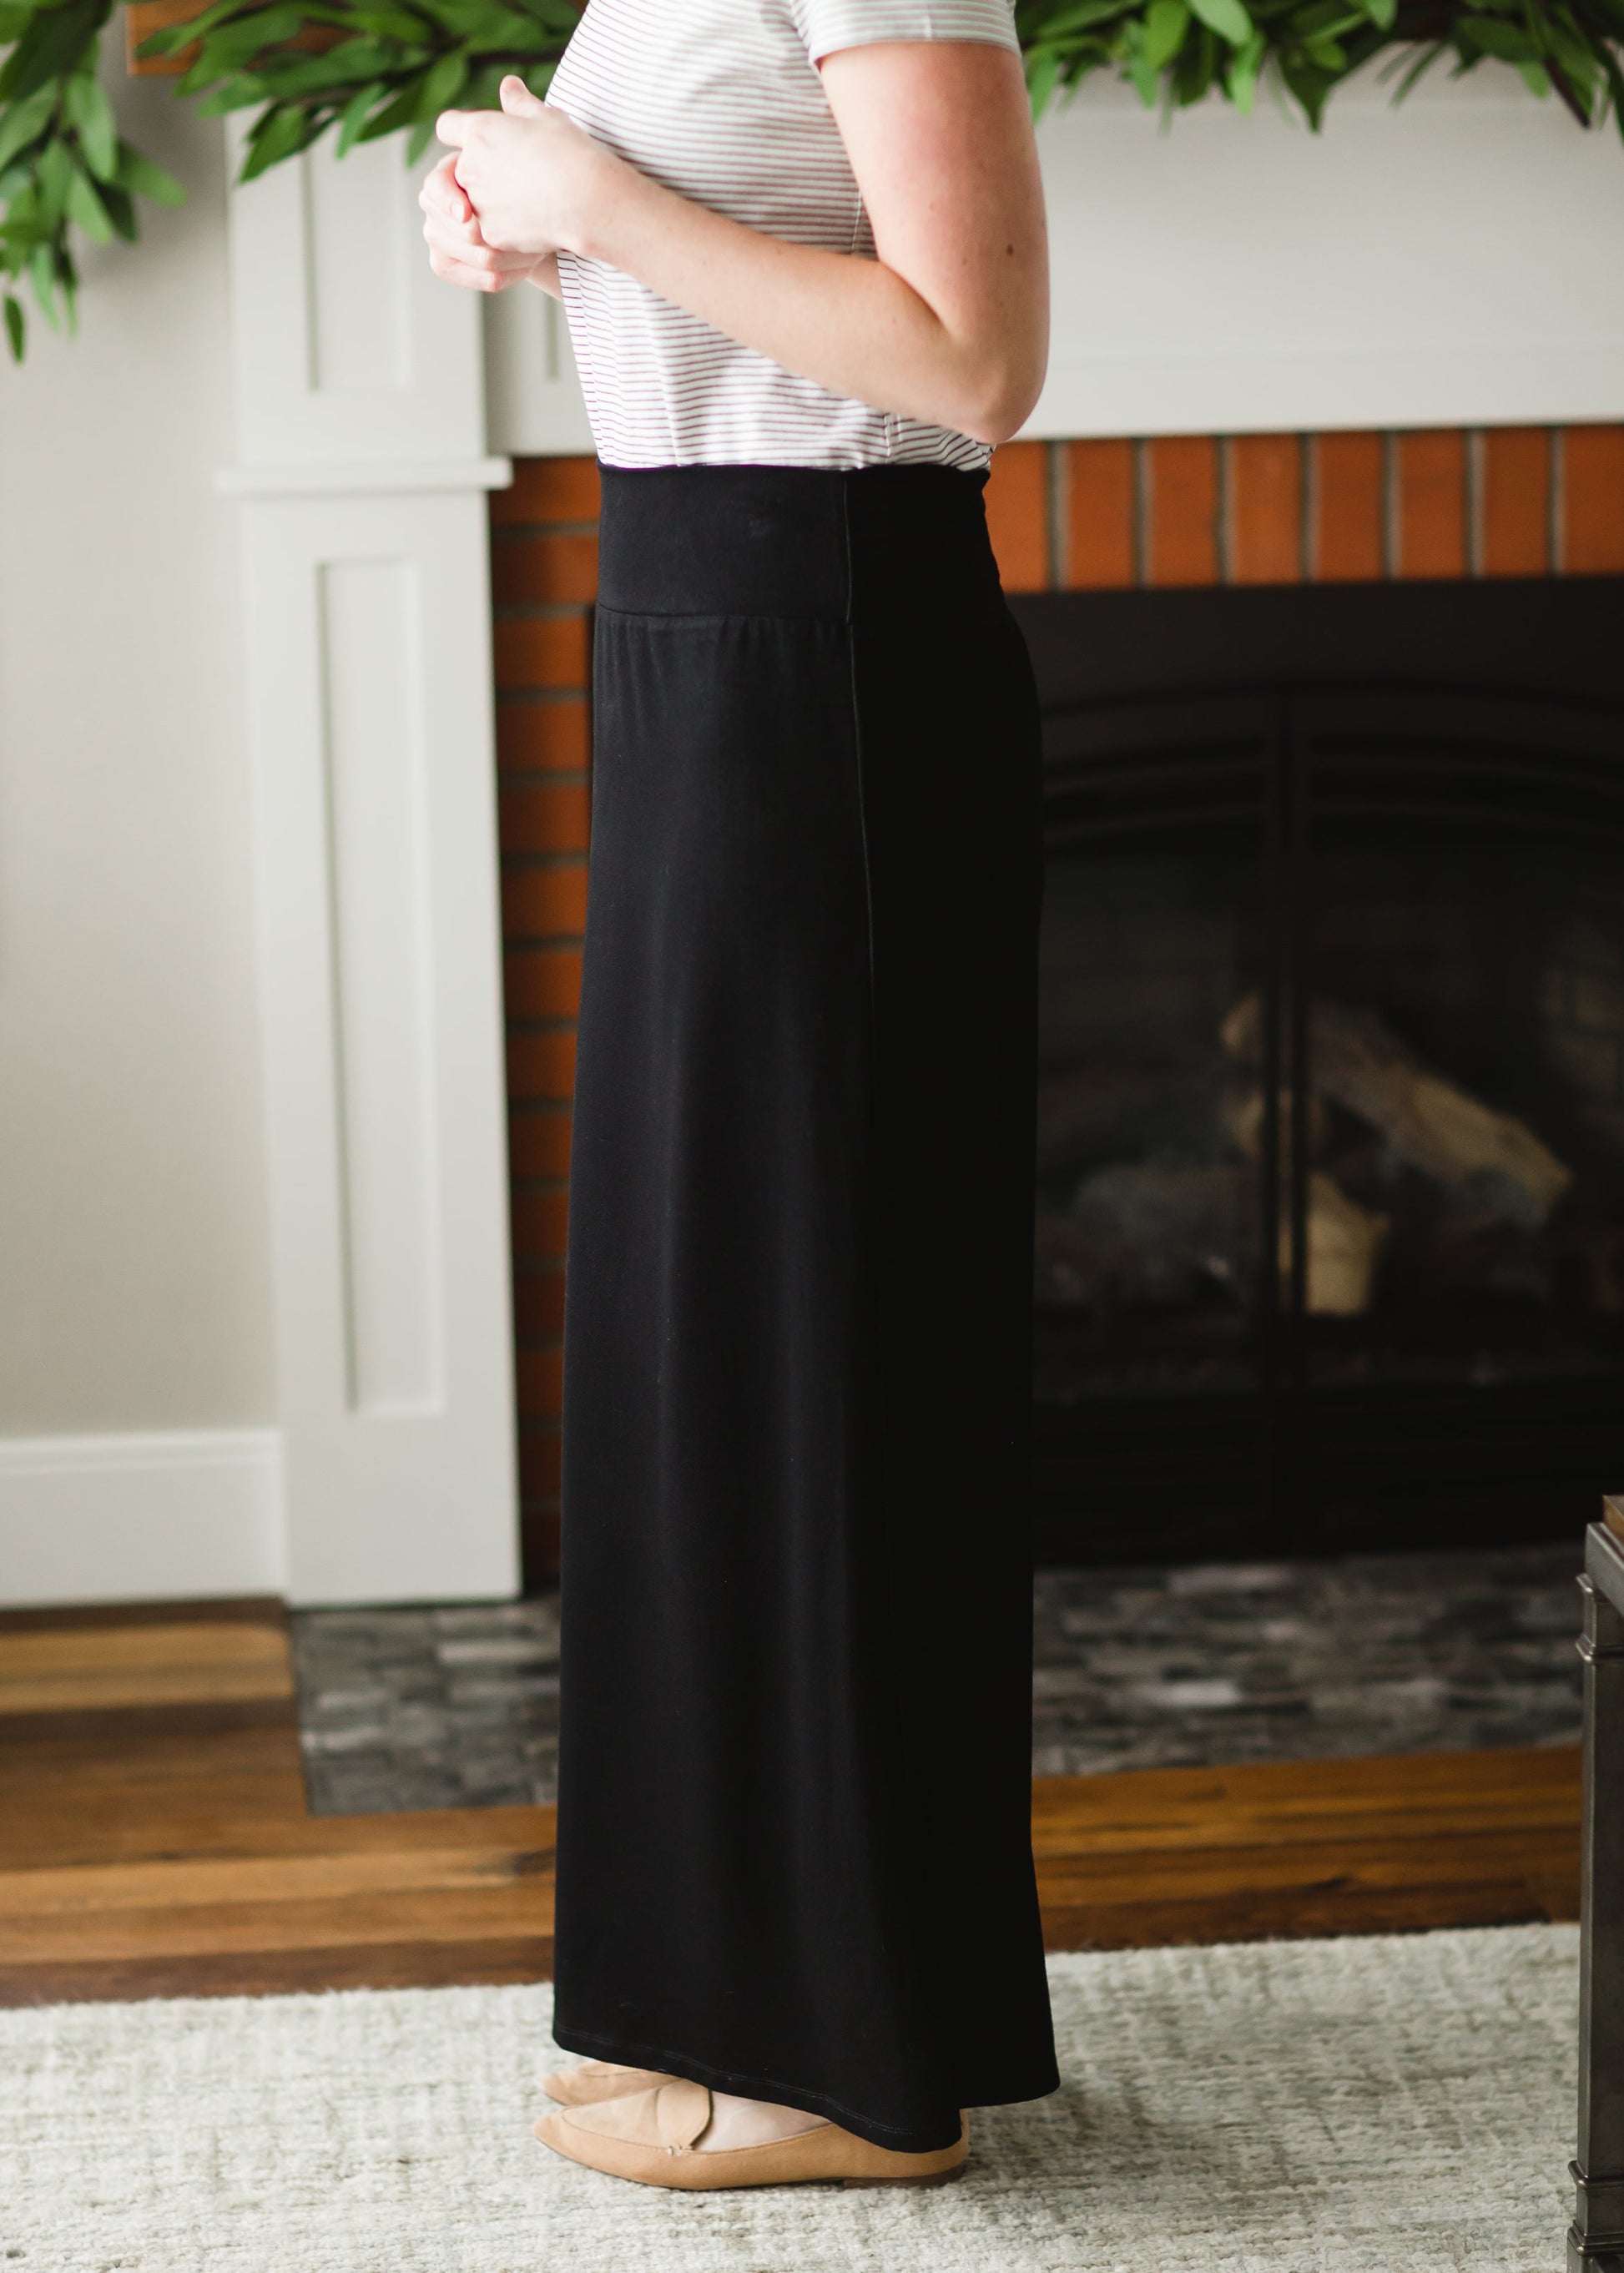 Angie Black Maxi Knit Skirt - FINAL SALE Skirts